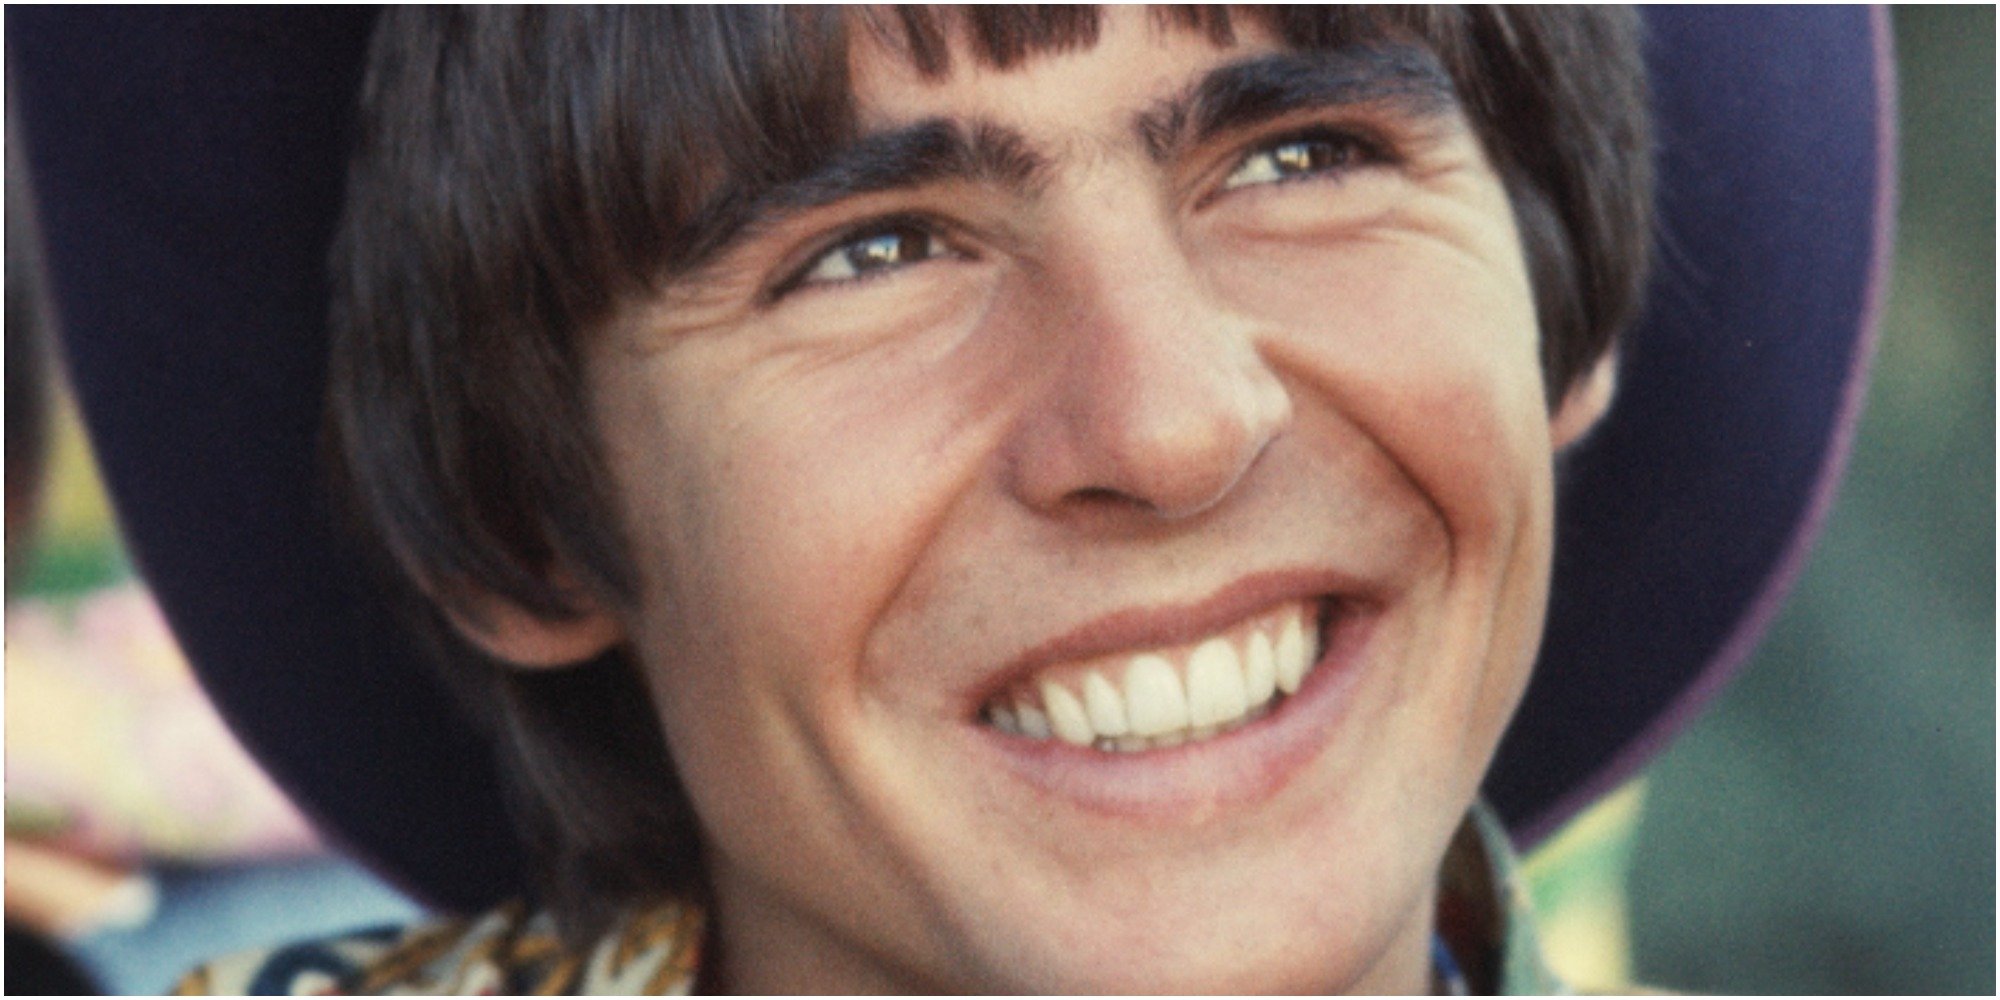 Davy Jones smiles for a publicity photograph.